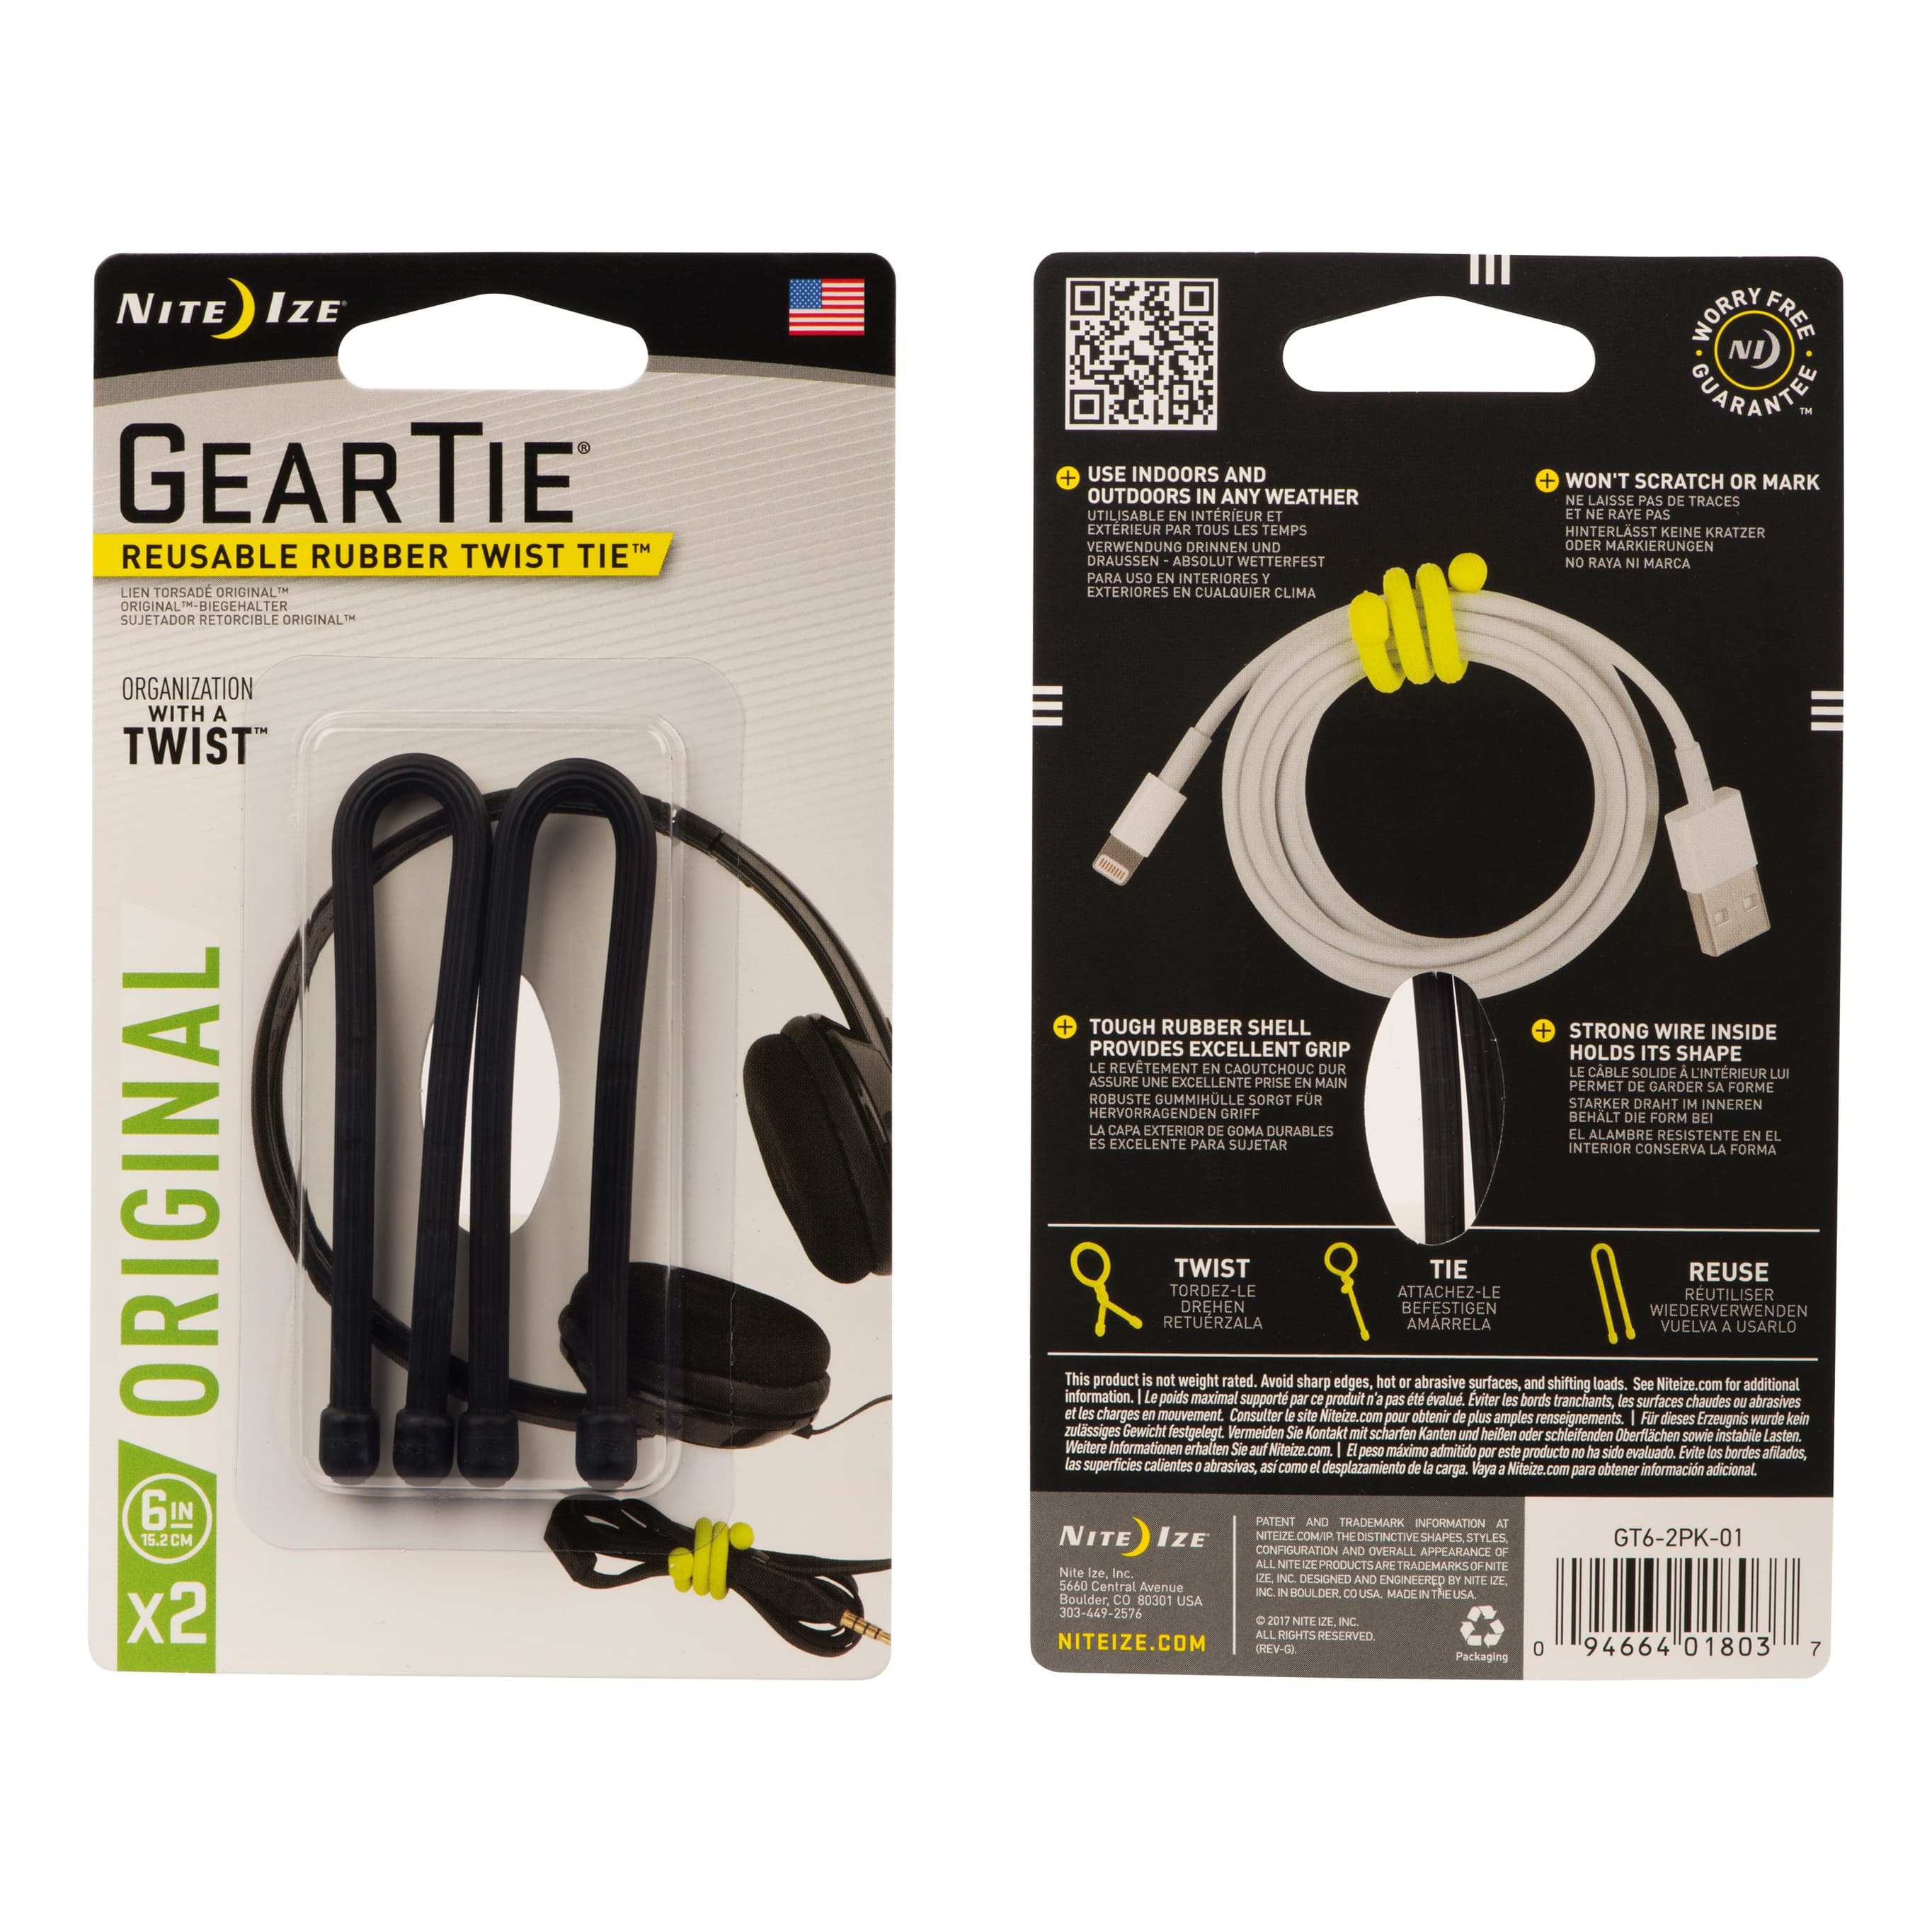 Nite Ize Gear Tie® Reusable Rubber Twist Tie™ 6" - 2 Pack - Black - Packaging View